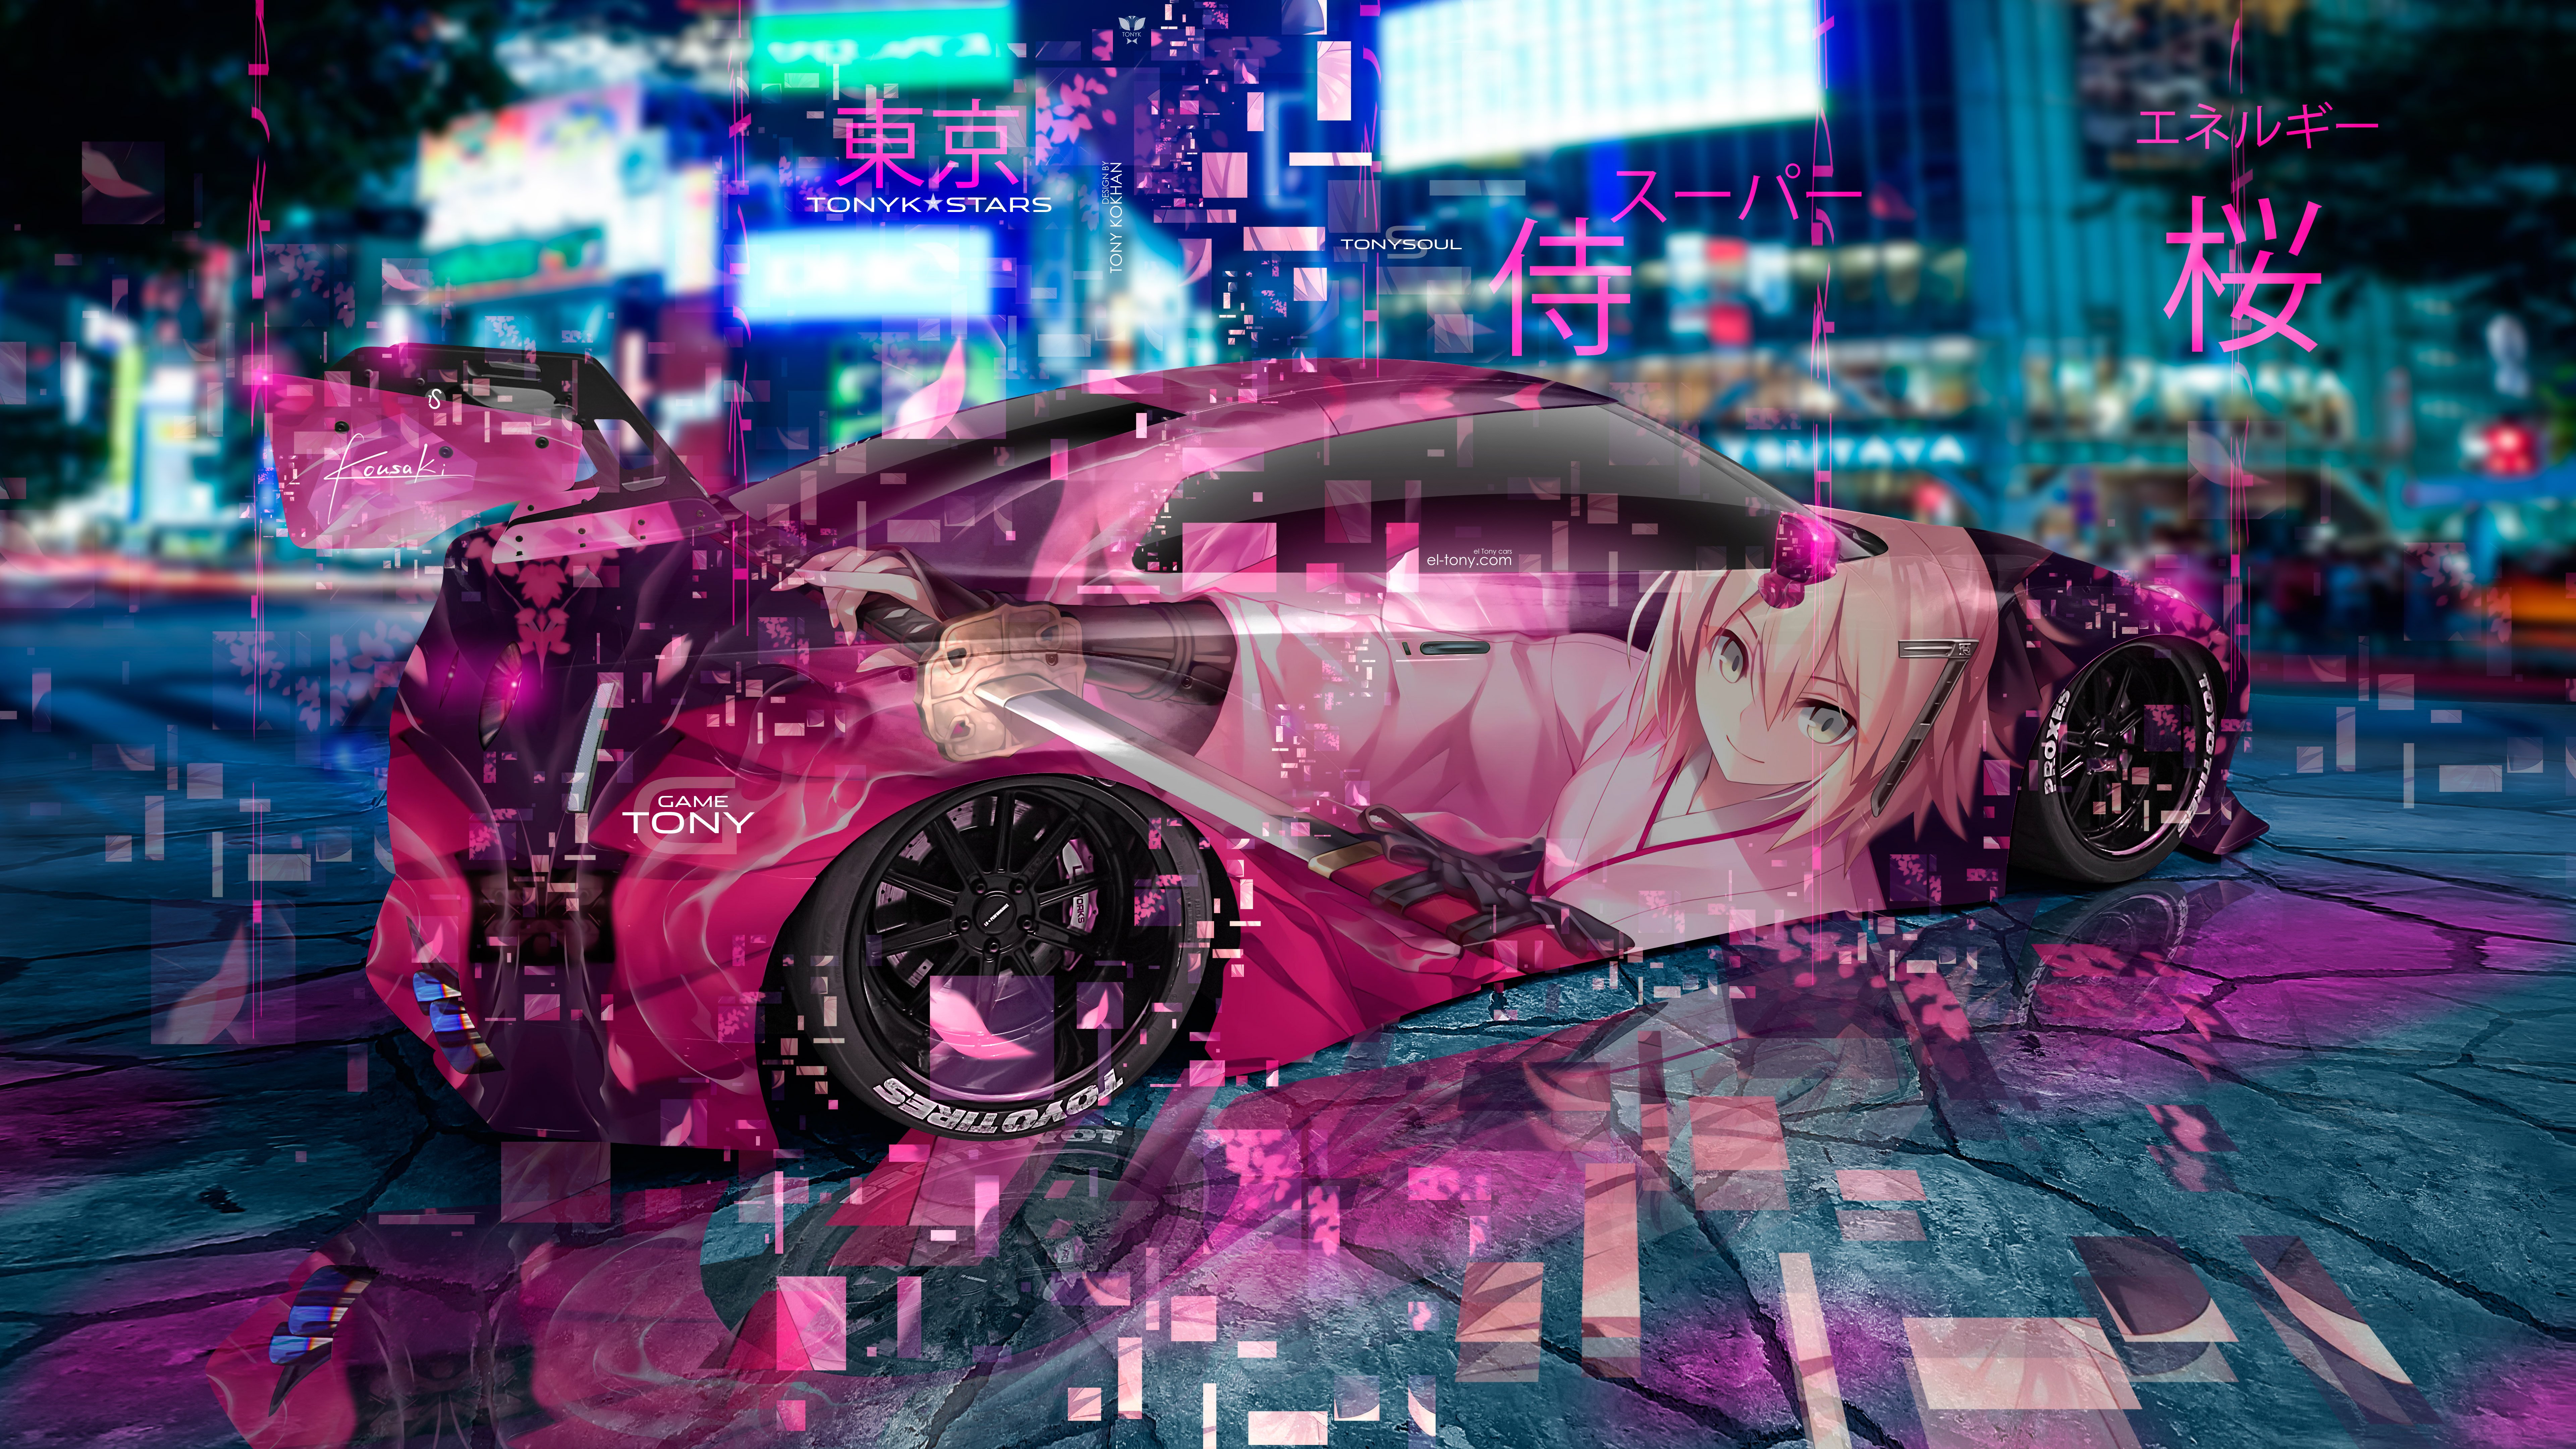 NISSAN GTR R35 JDM LIBERTY WALK SUPER SAMURAI GIRL TOKYO NIGHT CITY SAKURA ENERGY TONYSOUL ART CAR 2019